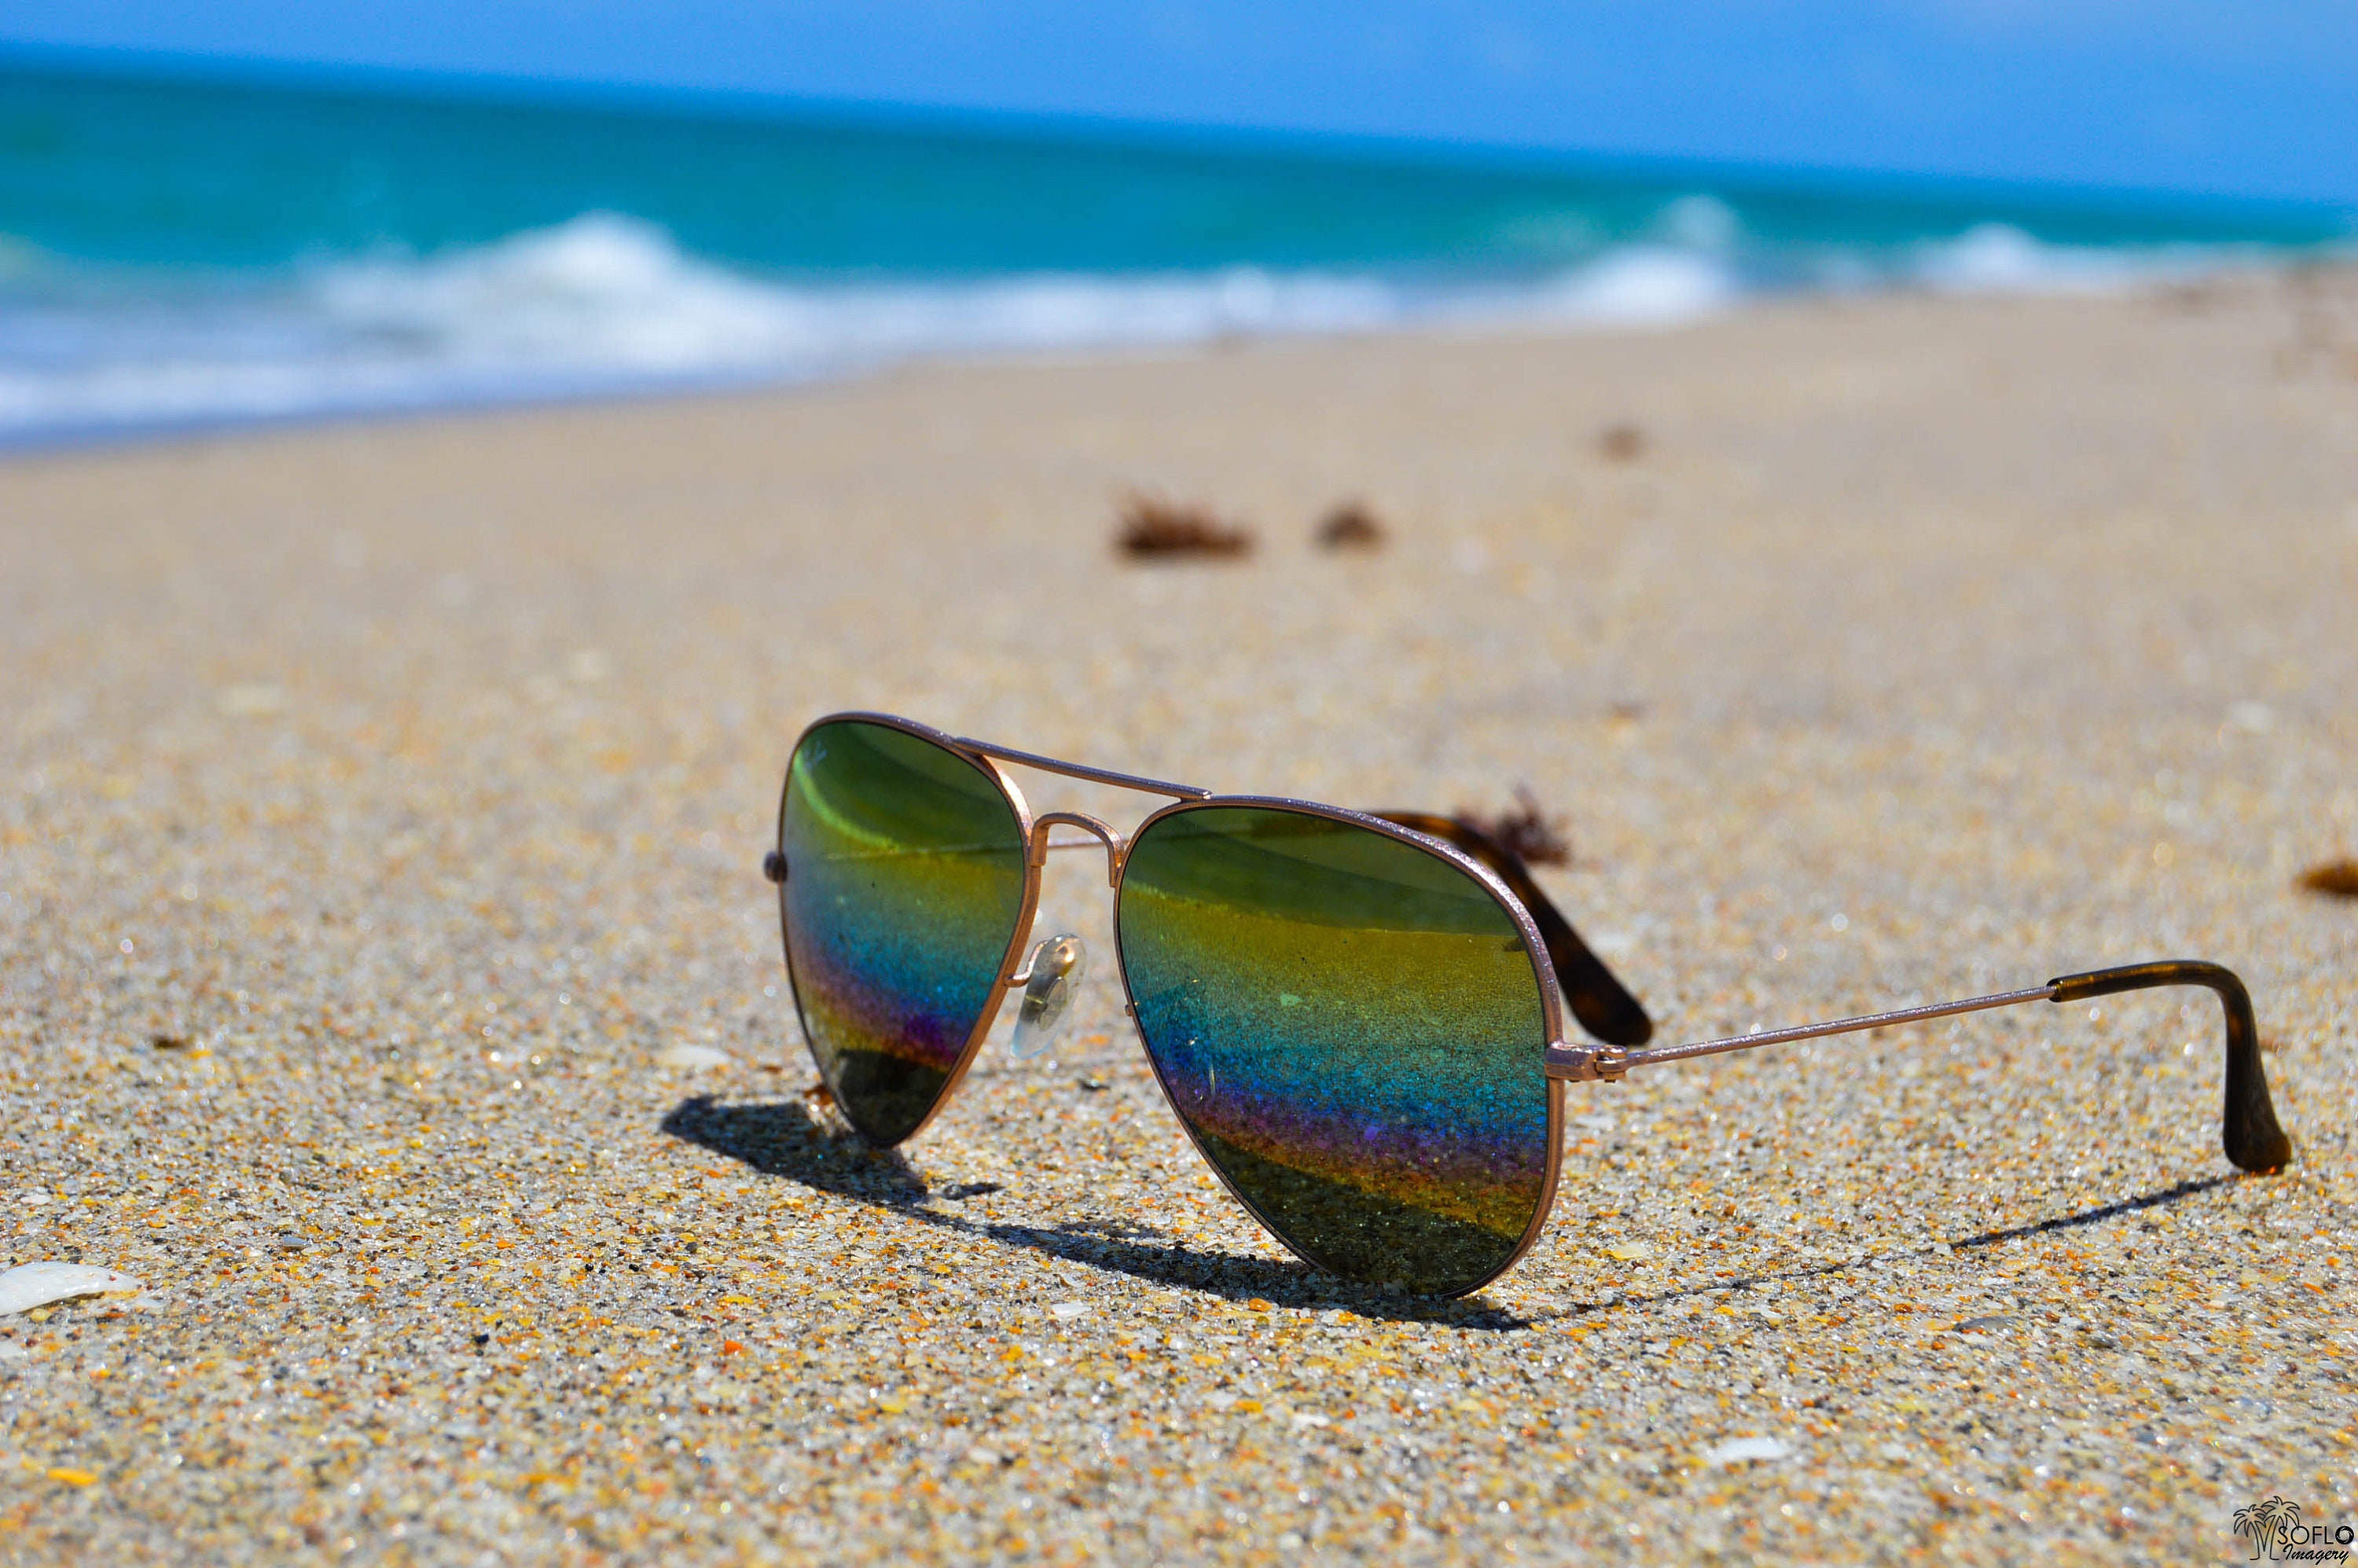 Sunglasses on the Beach -  UK